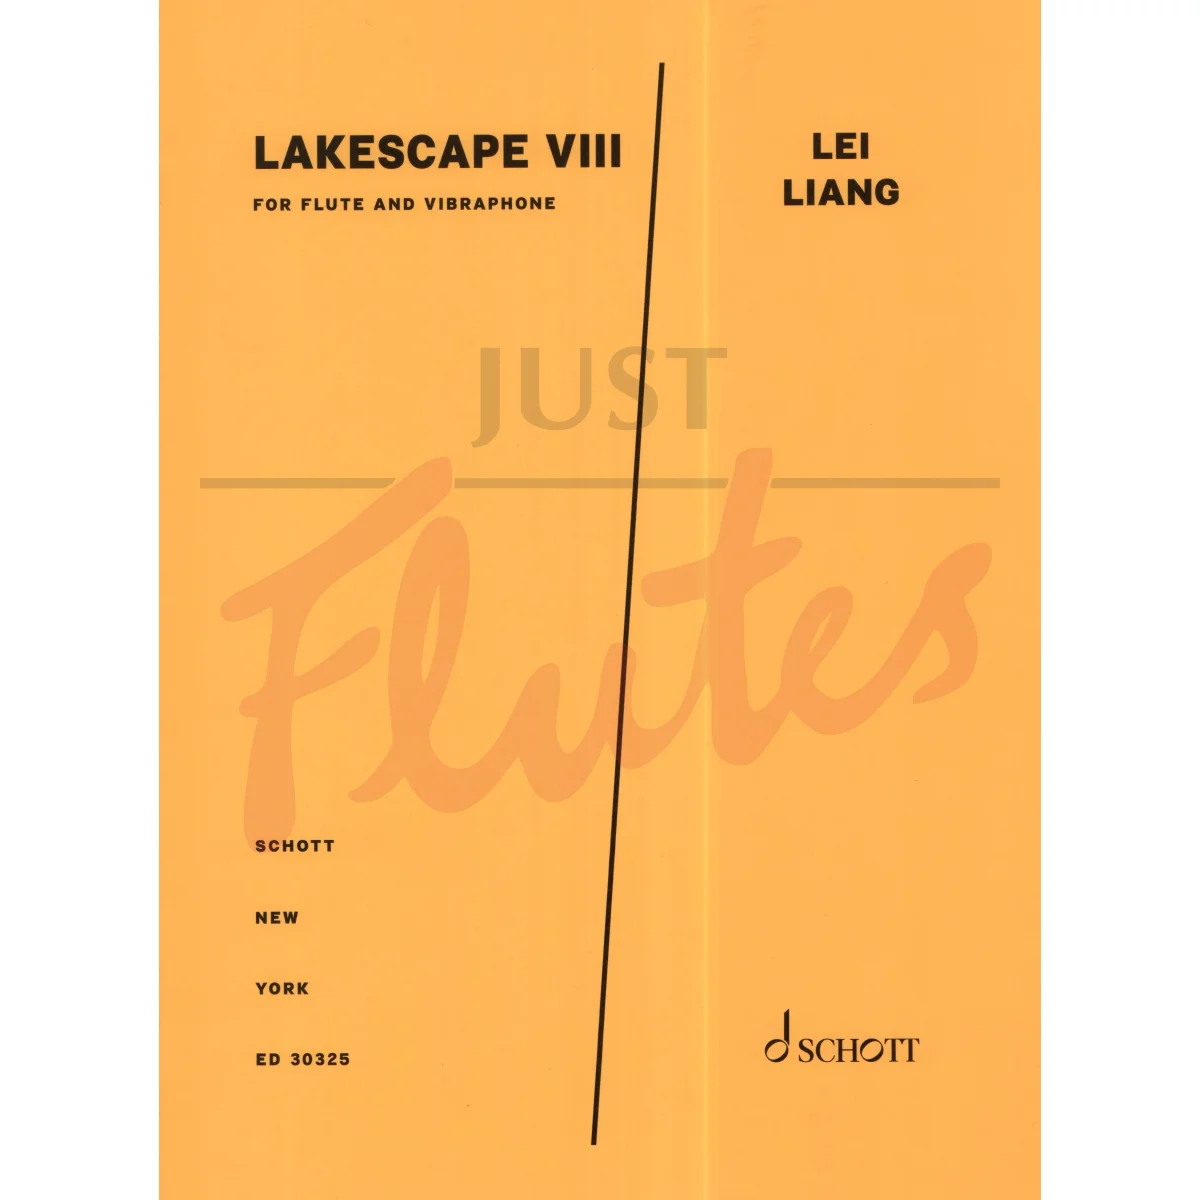 Lakescape VIII for Flute and Vibraphone